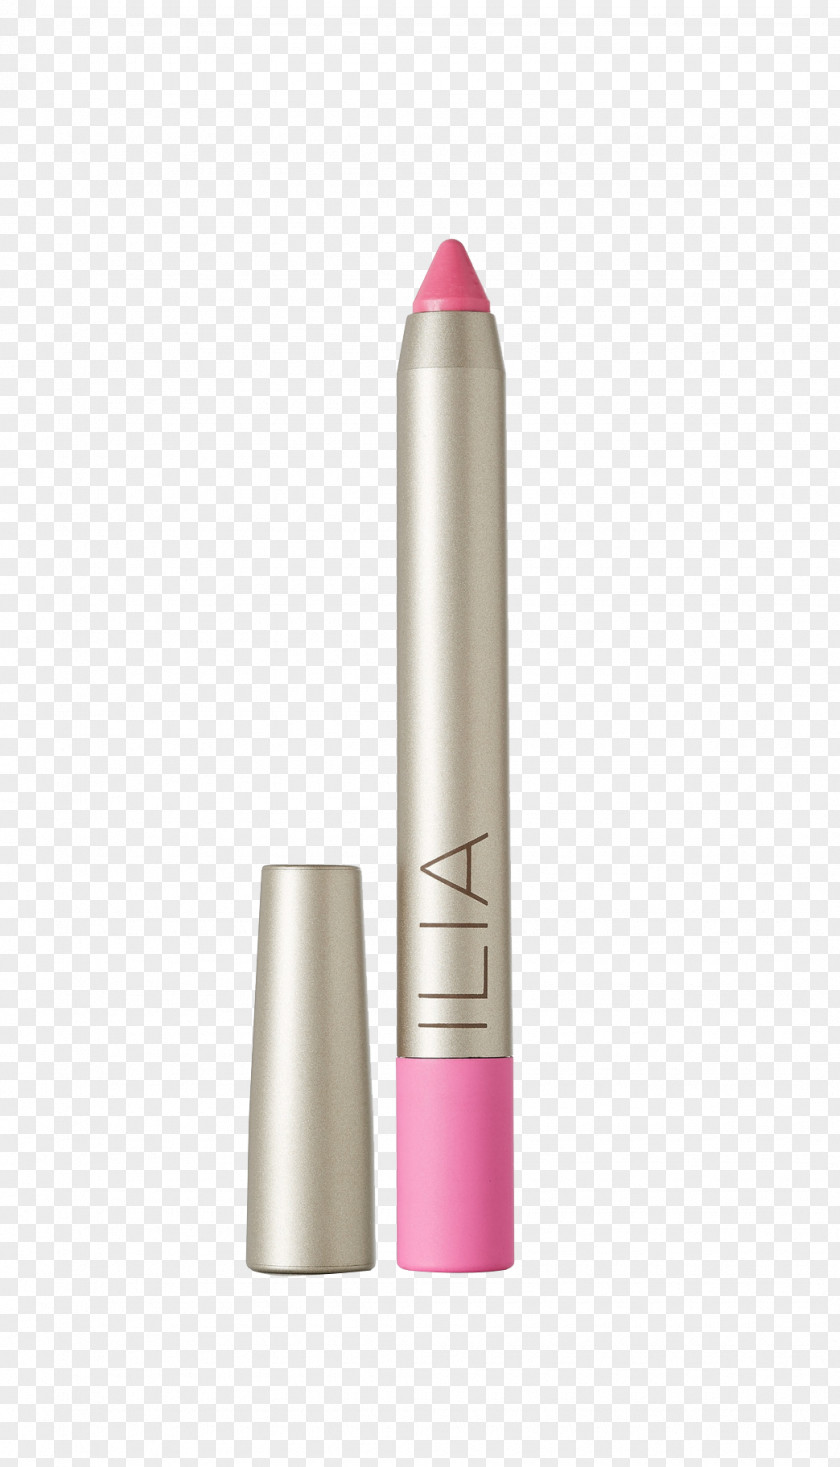 Head Lipstick Cosmetics Lip Gloss Make-up PNG